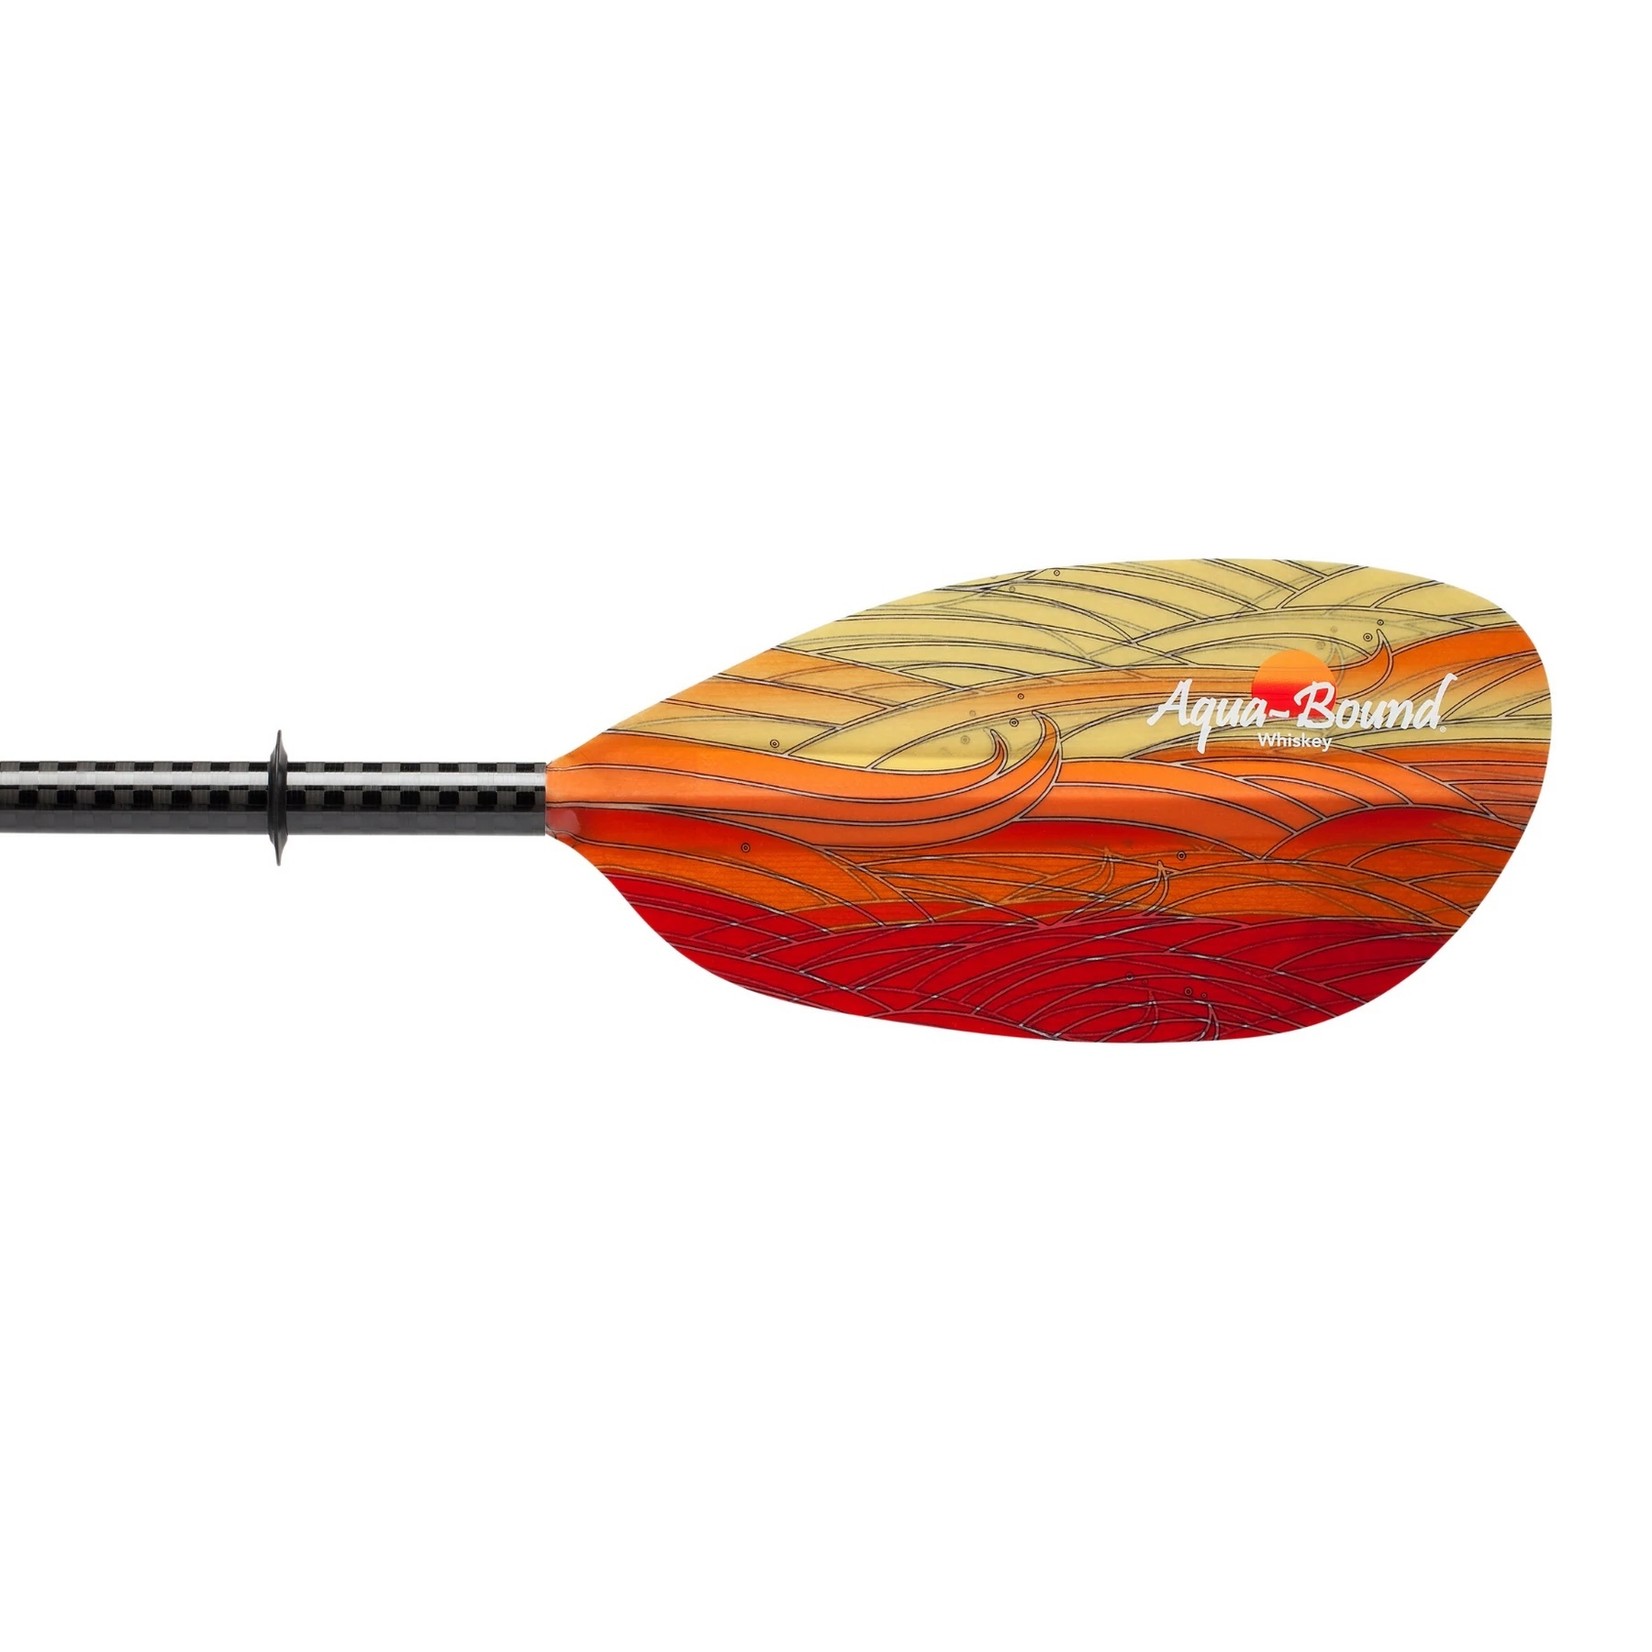 Aqua Bound Whiskey Fiberglass 2-Piece Straight Shaft Kayak Paddle